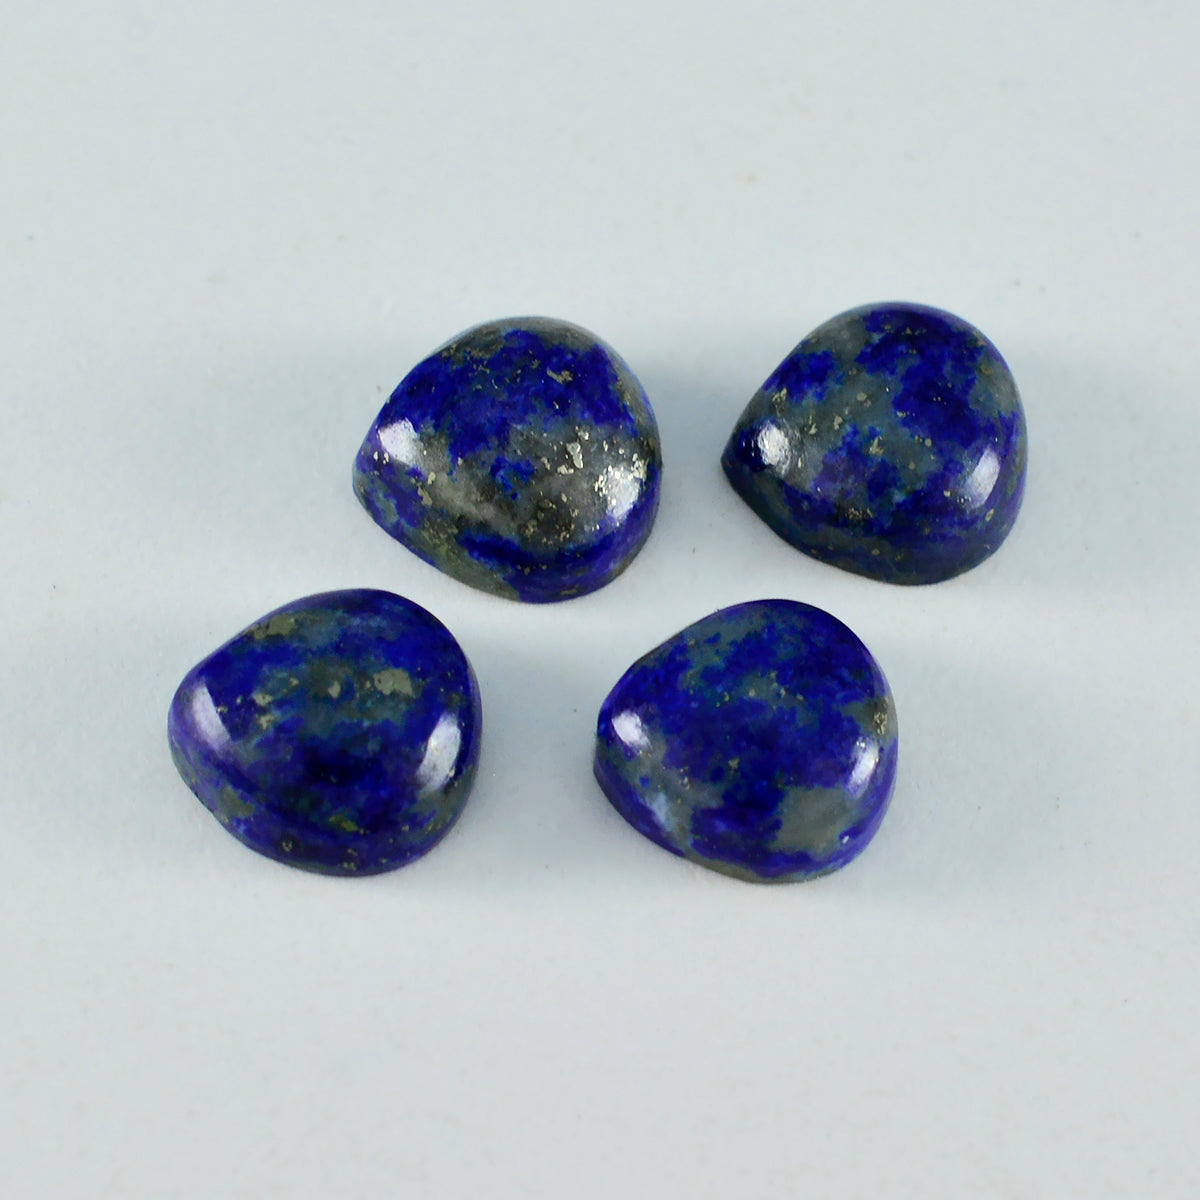 Riyogems 1PC Blue Lapis Lazuli Cabochon 8x8 mm Heart Shape A+1 Quality Loose Gemstone